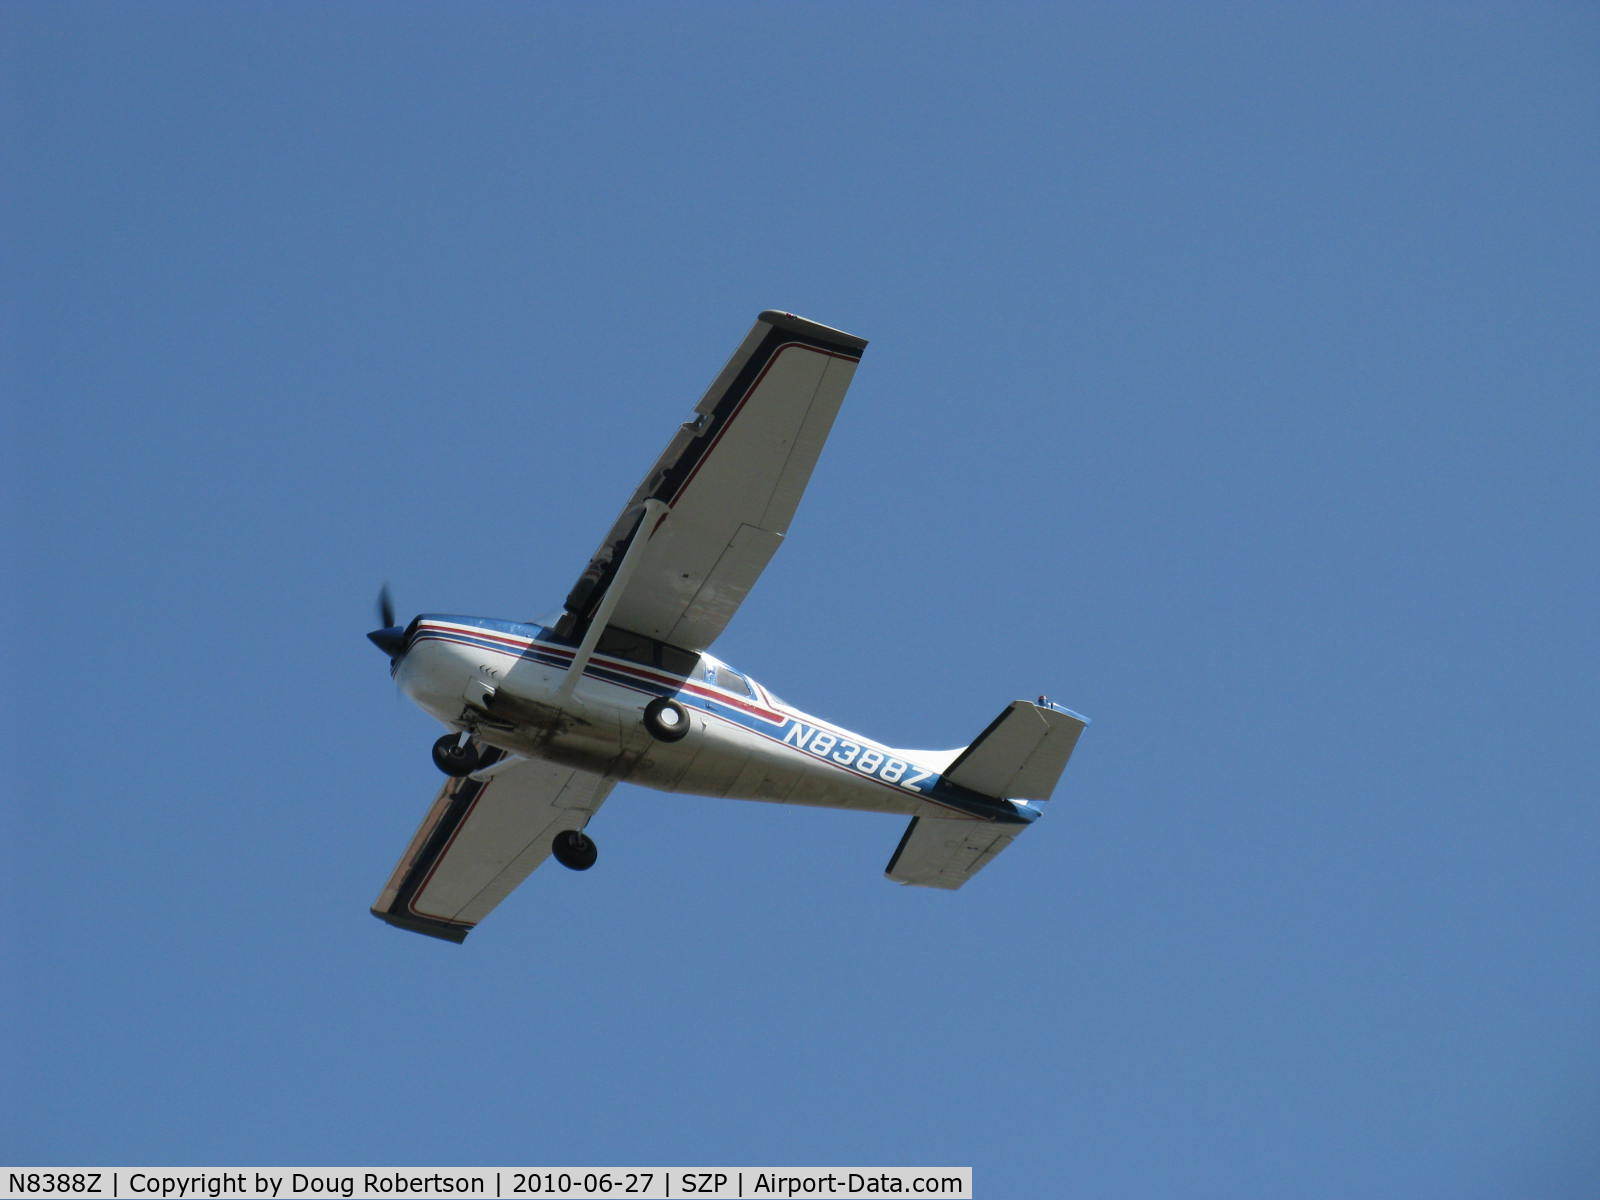 N8388Z, 1963 Cessna 210-5 C/N 205-0388, 1963 Cessna 210-5(205) UTILINE (fixed gear version of 210C), Continental IO-470-E 260 Hp, takeoff climb Rwy 22